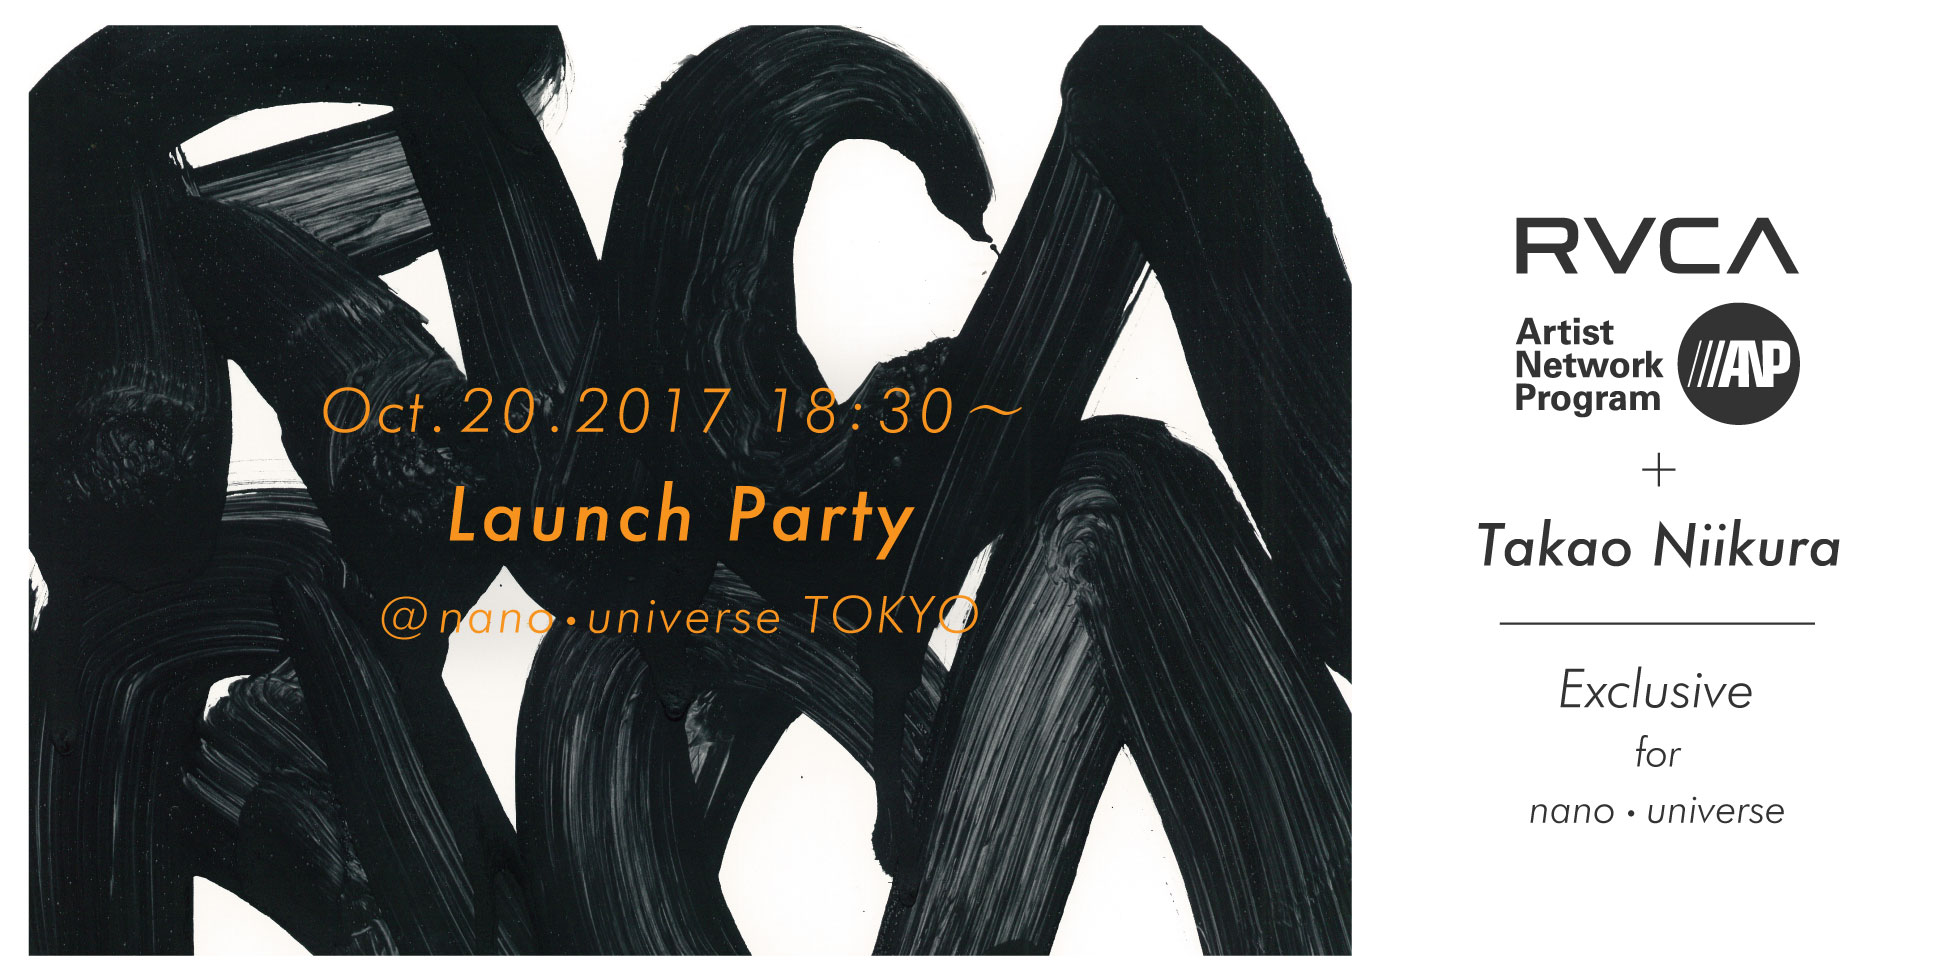 RVCA + Takao Niikura Exclusive for nano・universe Launch Party